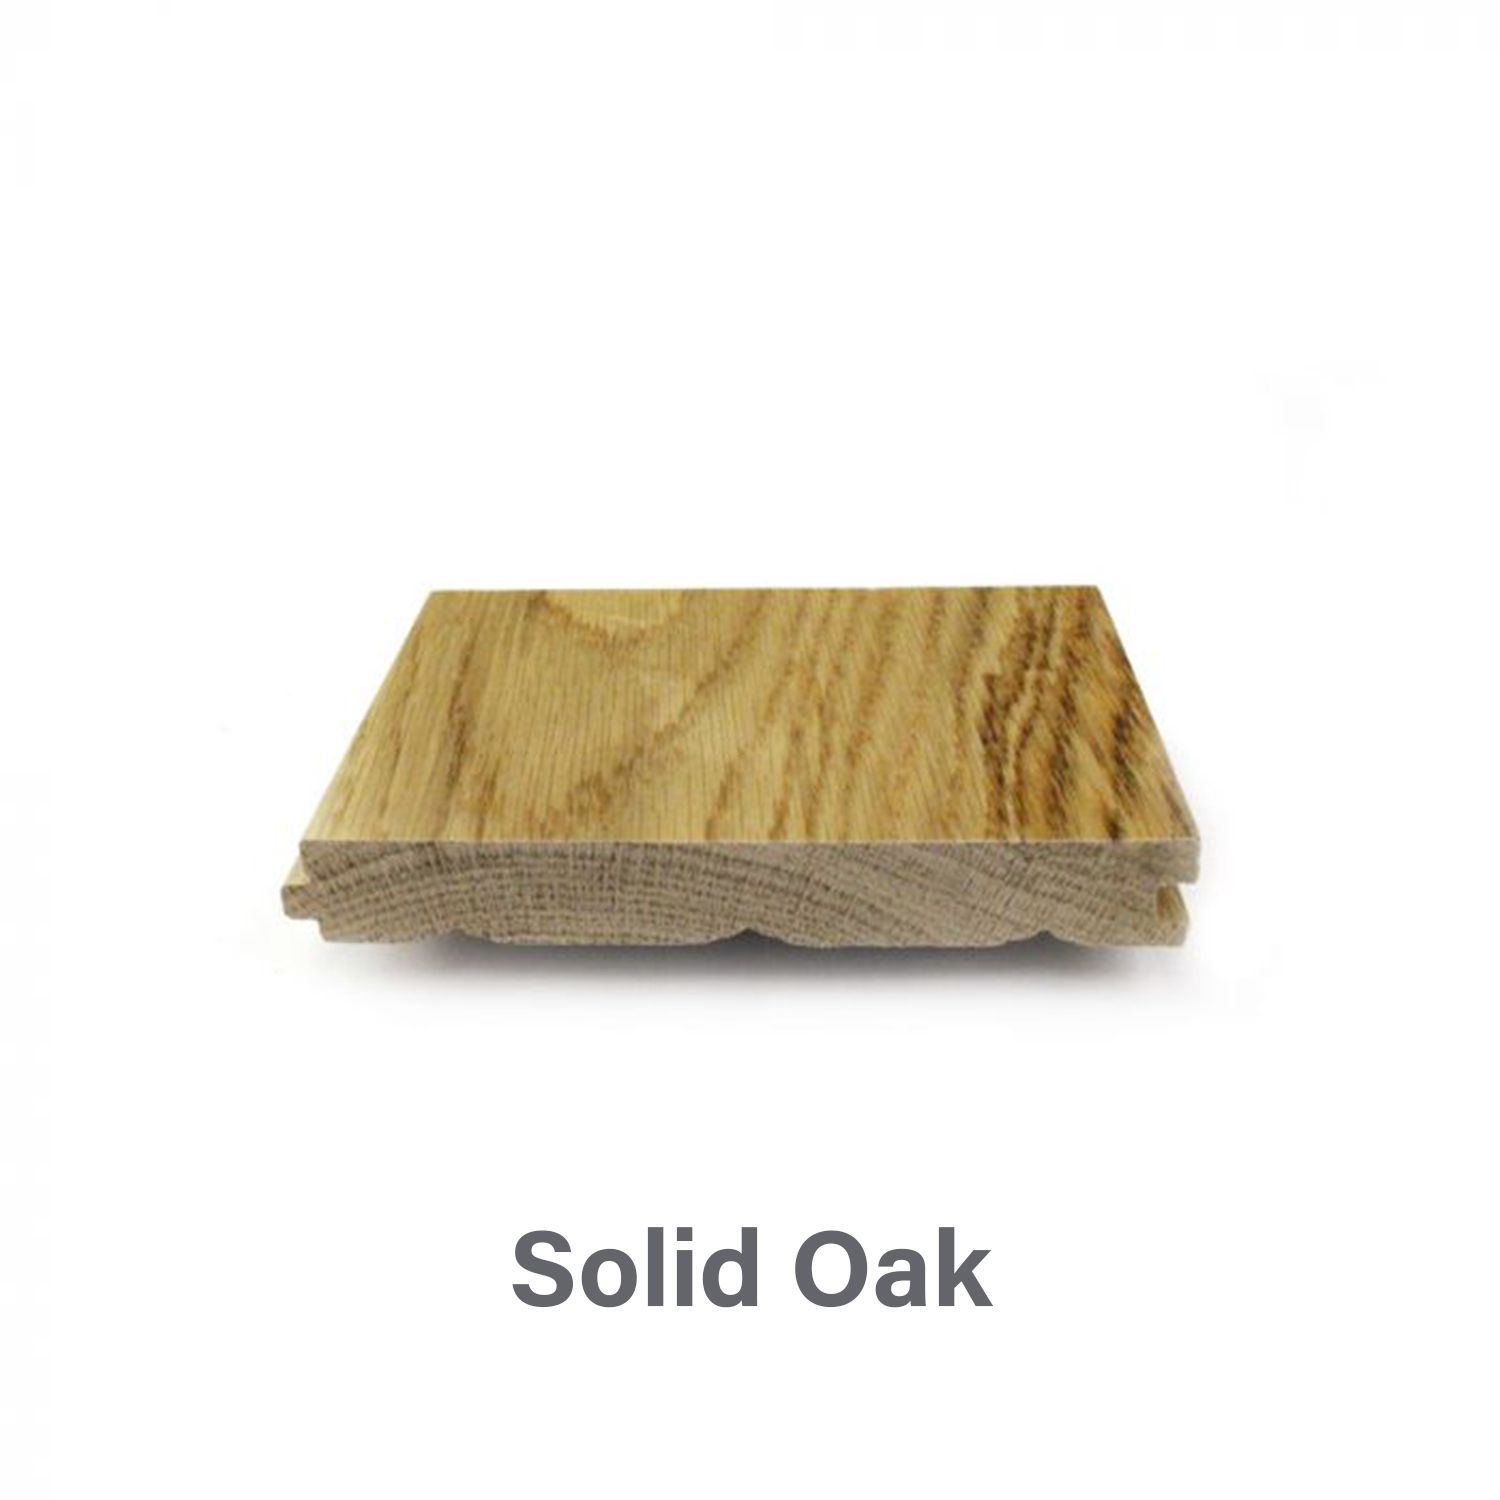 Should I choose Engineered or Solid Hardwood Flooring?